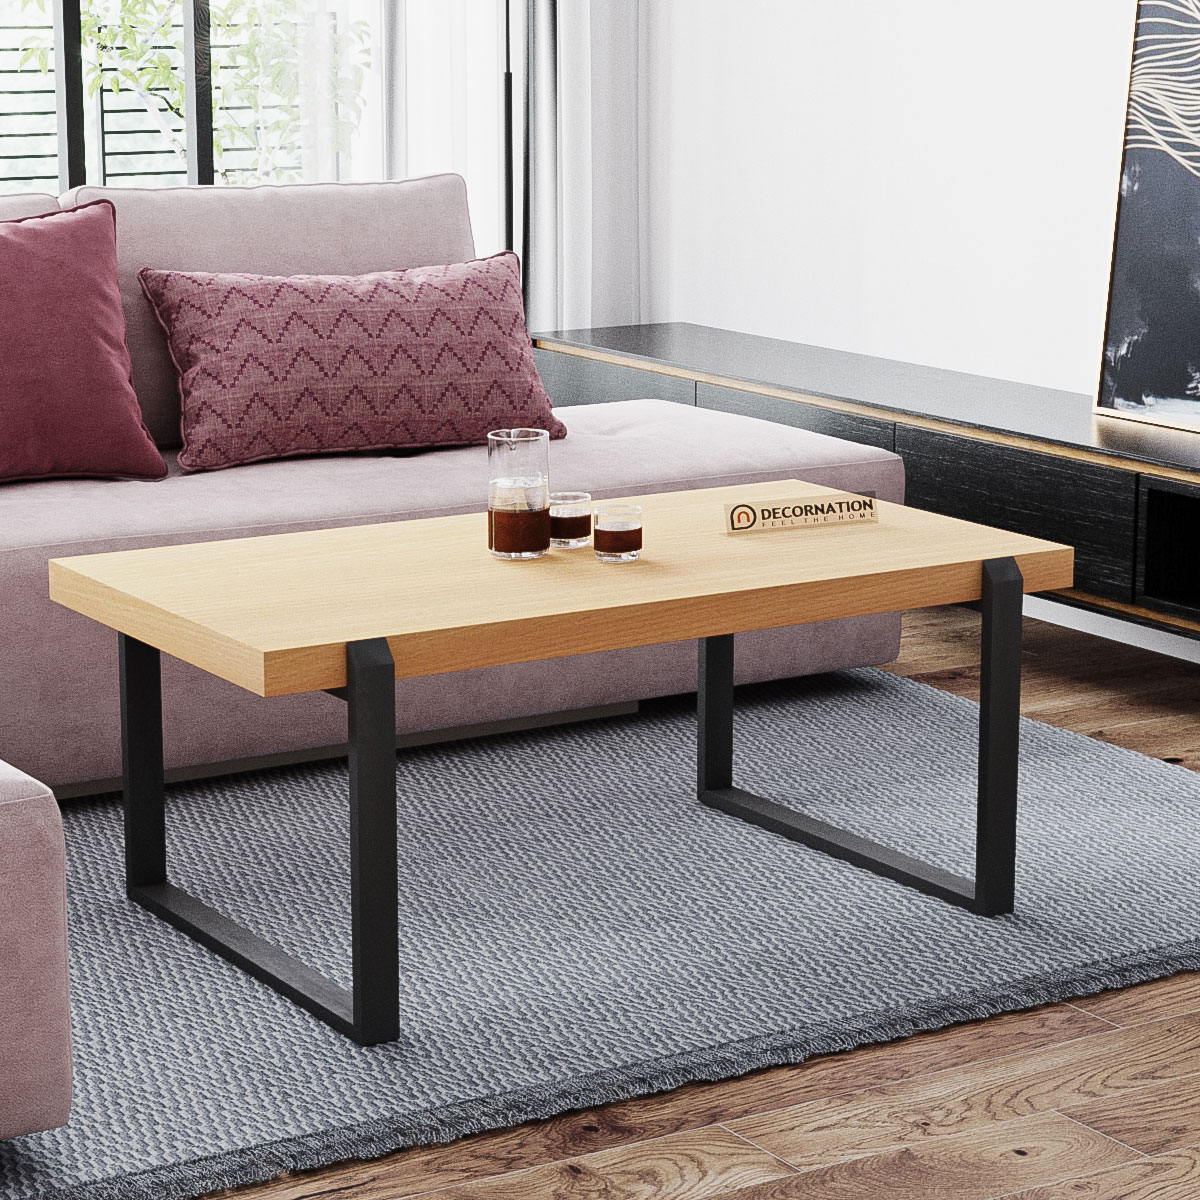 Kiara Coffee Table for Living Room/Bedroom - Bavarian Beech - Decornation